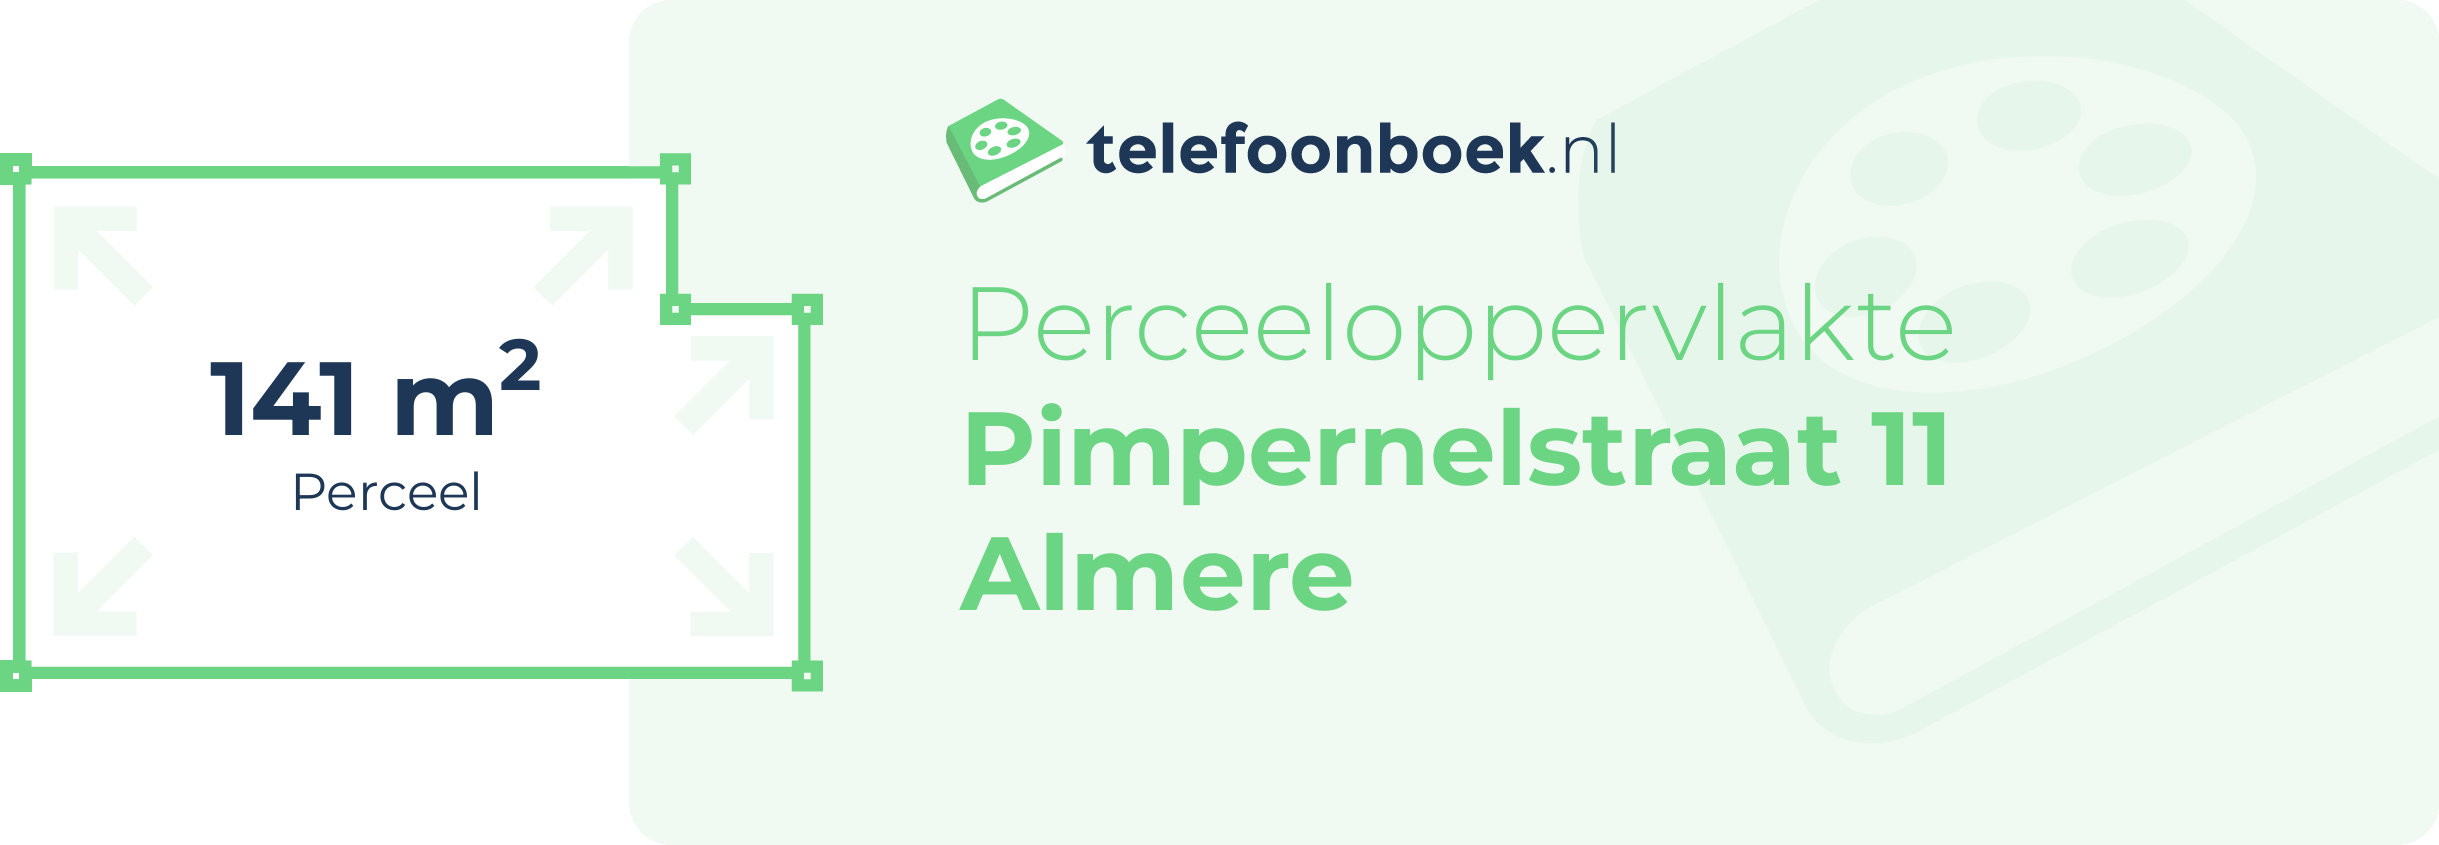 Perceeloppervlakte Pimpernelstraat 11 Almere